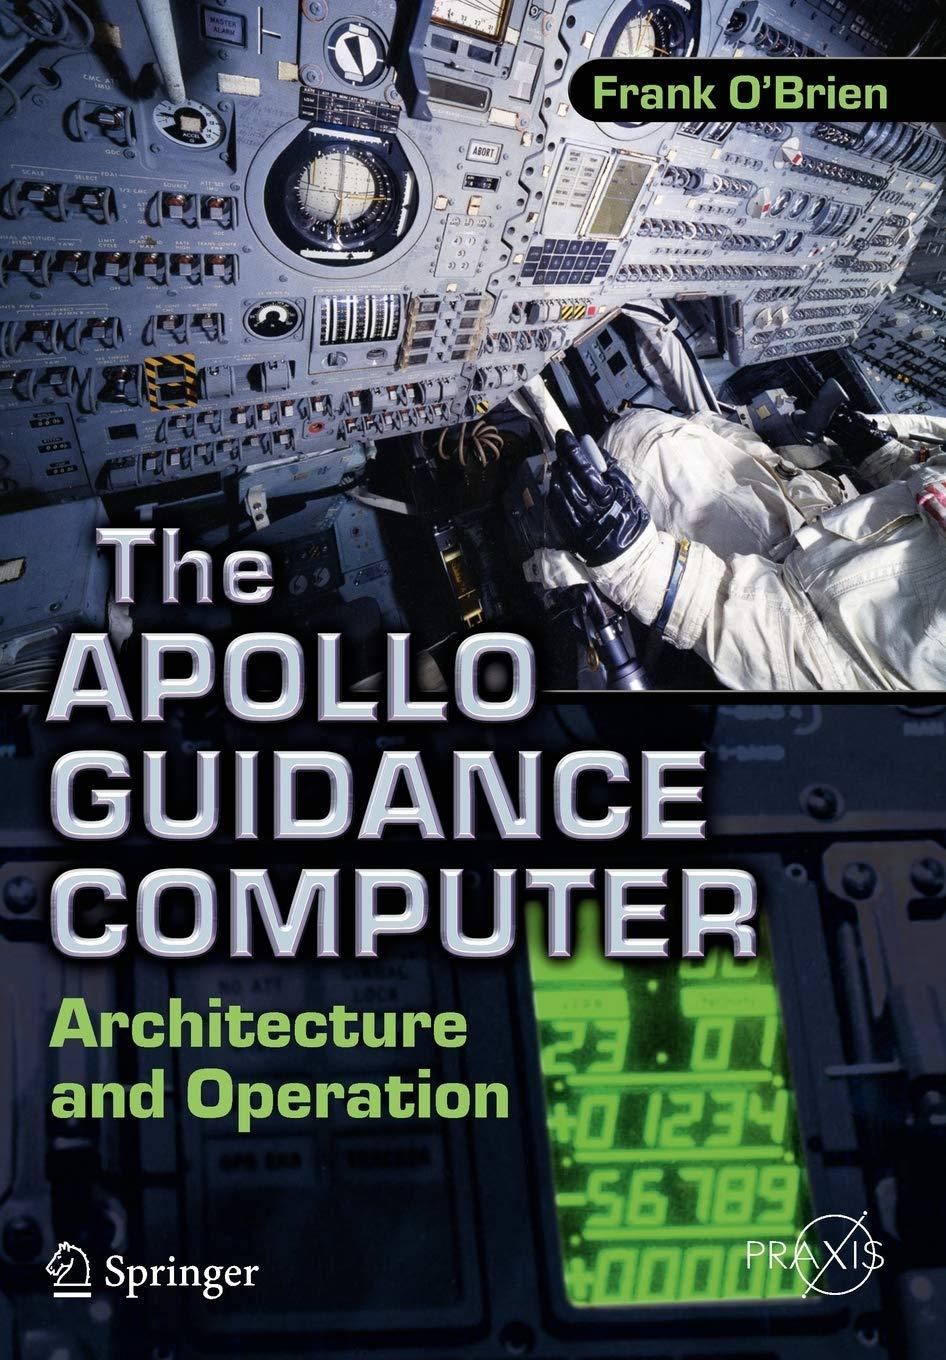 the apollo guidance computer  architecture and operation 2010th edition frank o'brien 1441908765,